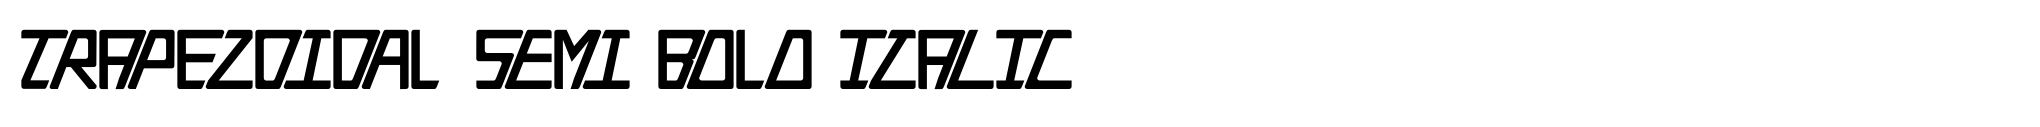 Trapezoidal Semi Bold Italic image